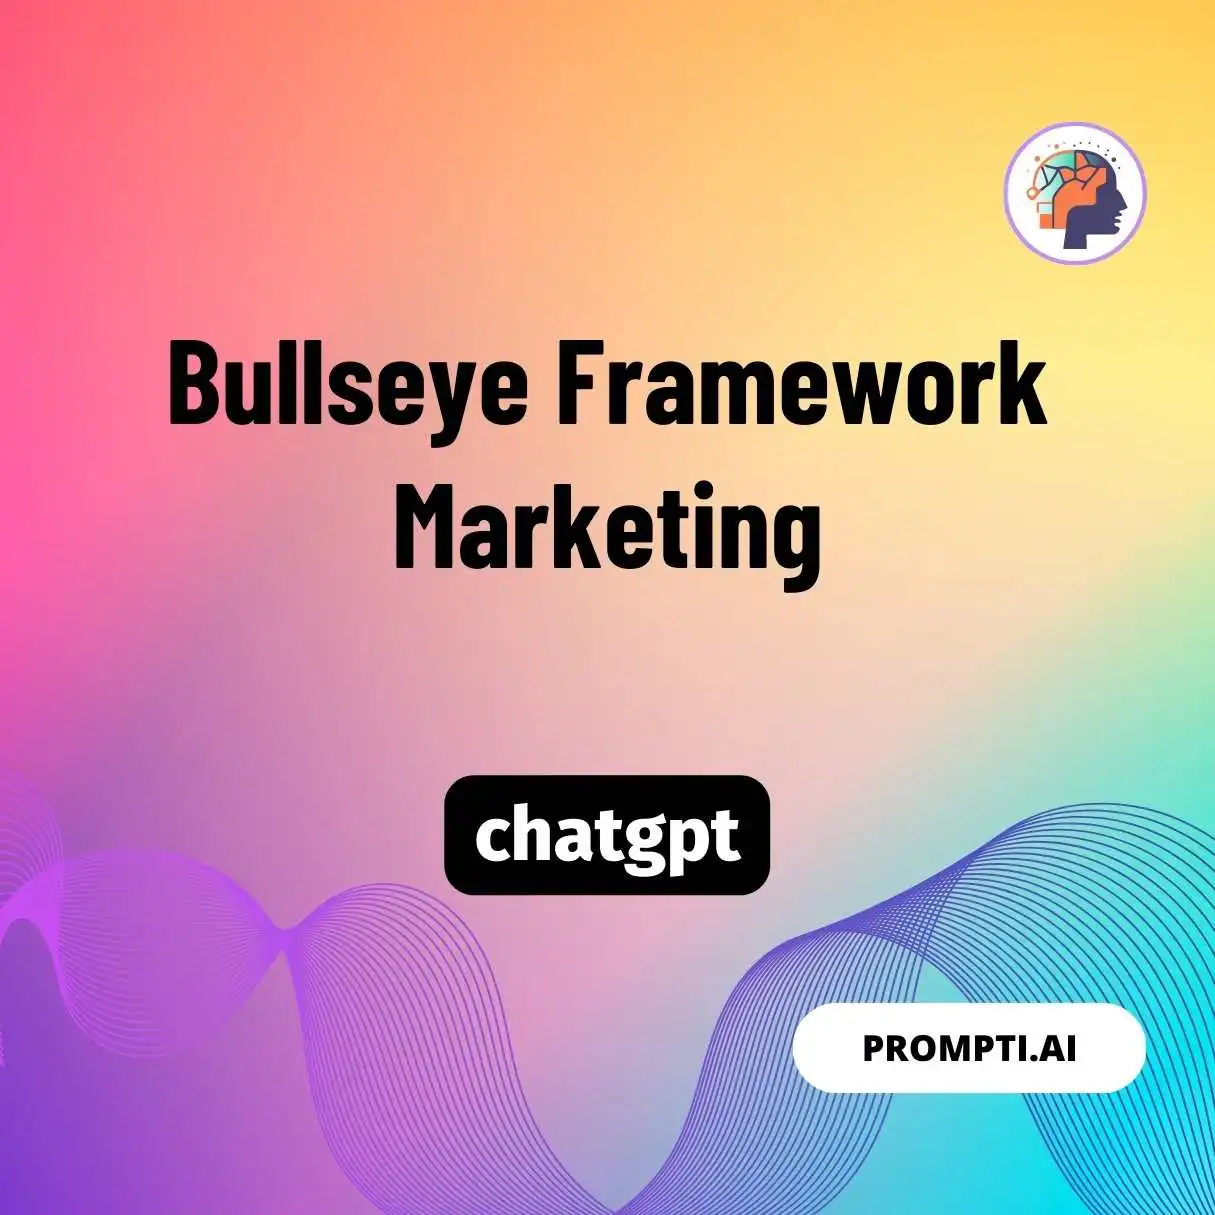 Bullseye Framework marketing